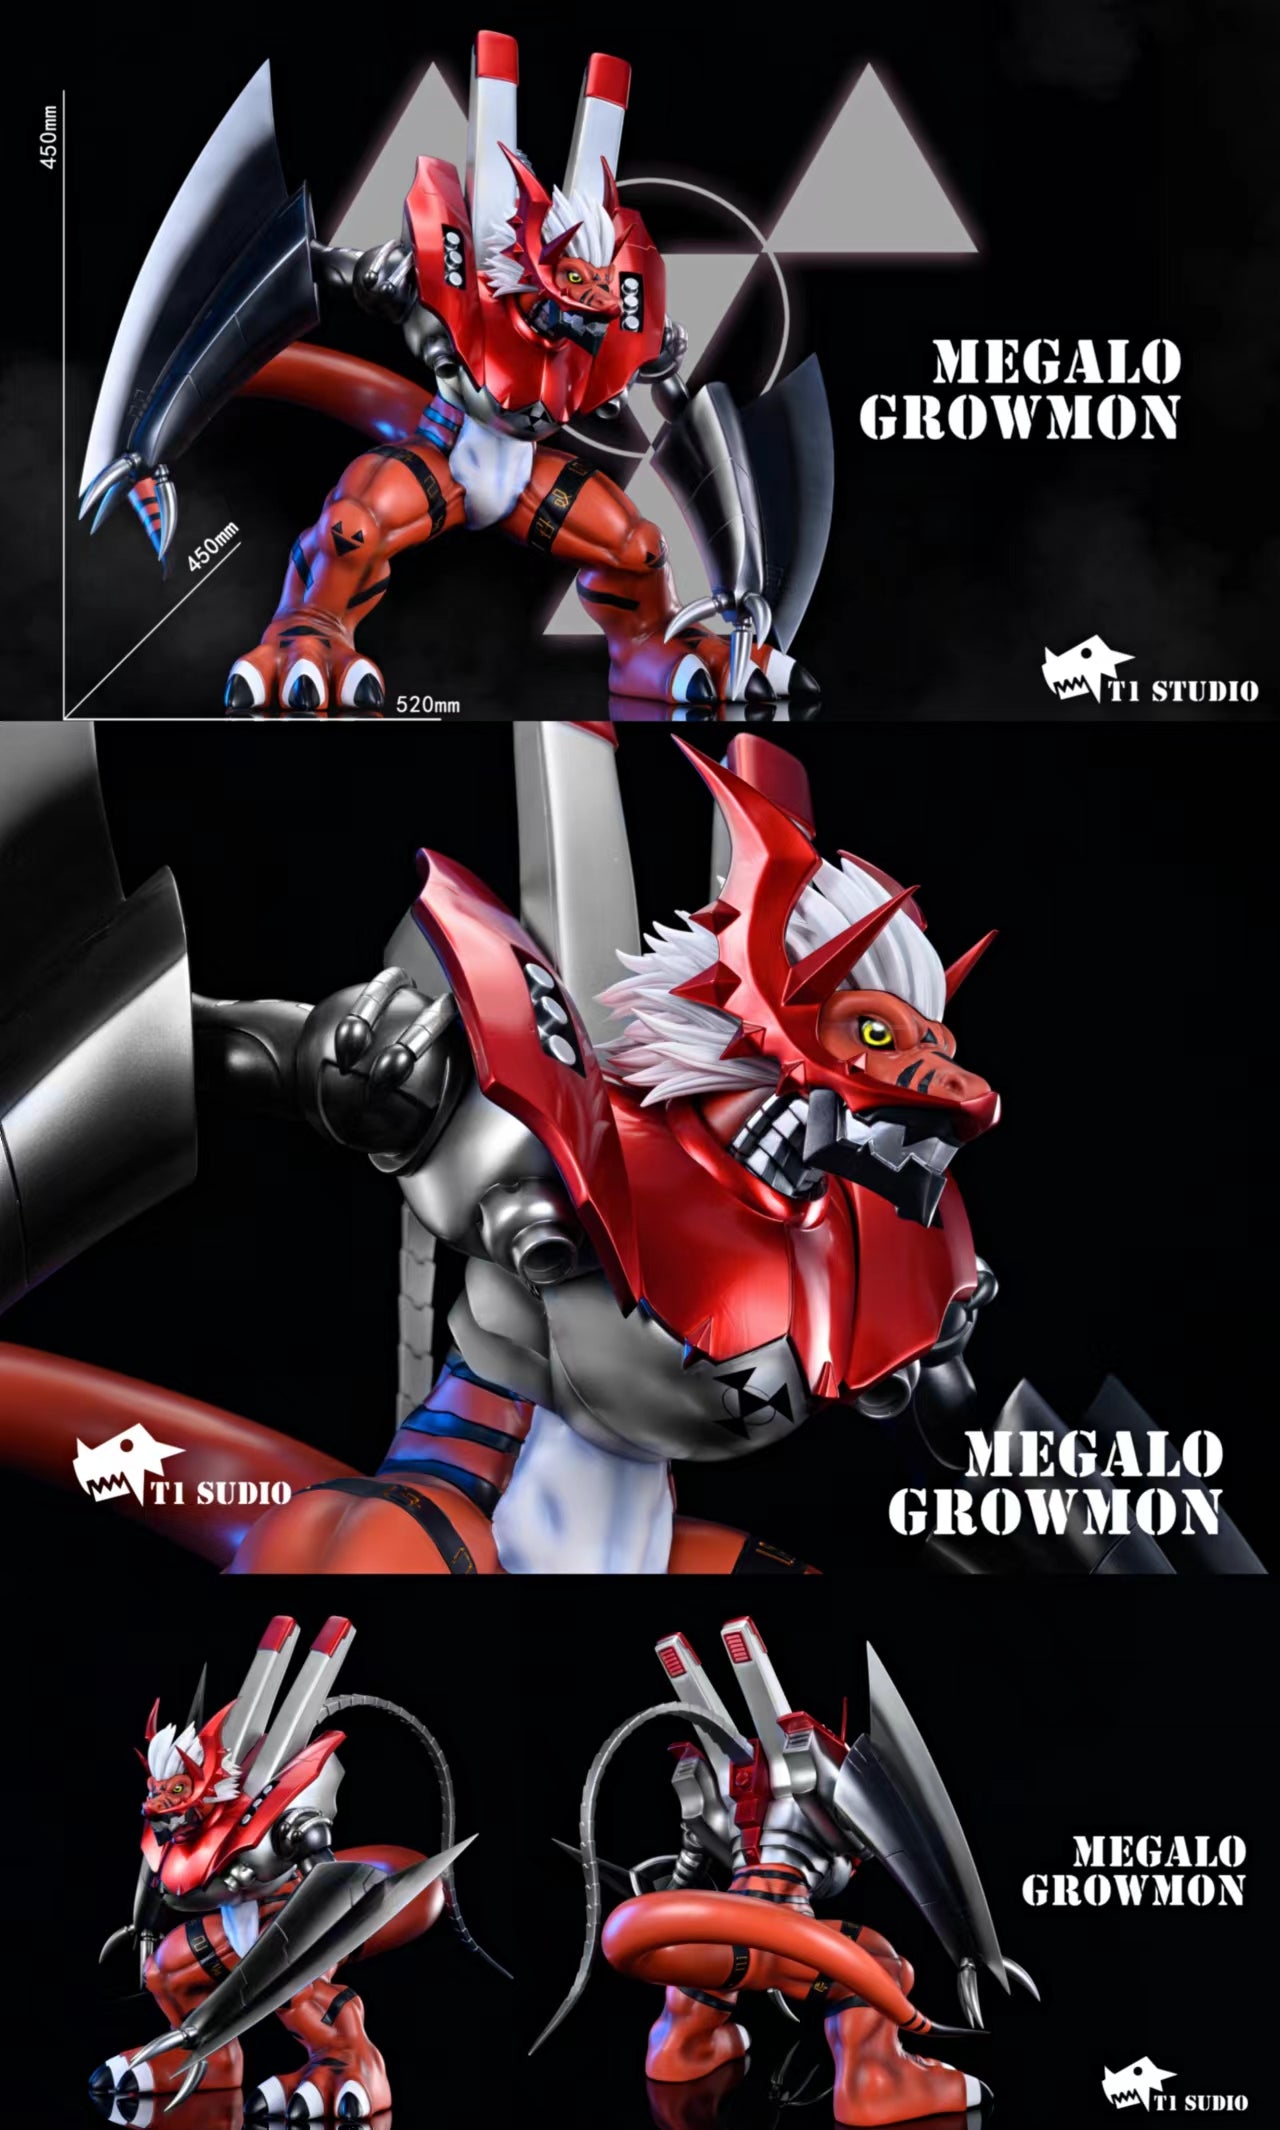 〖Sold Out〗Digimon Megalo Growmon - T1 Studio